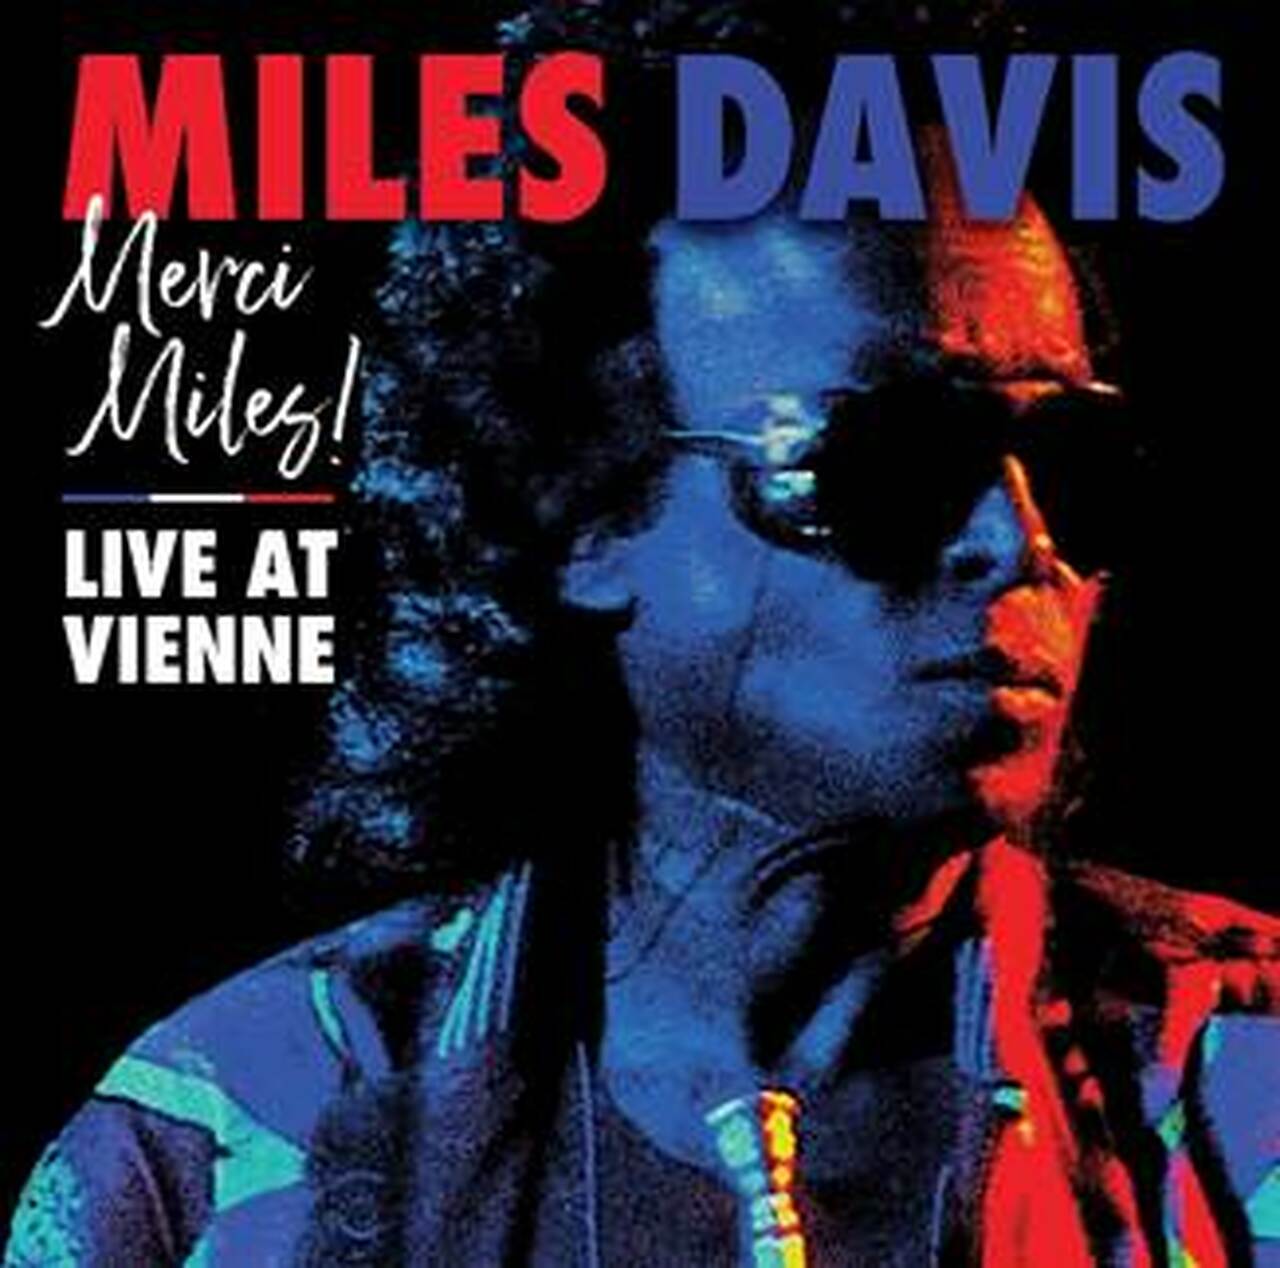 MILES DAVIS - Merci Miles! Live at Vienne - 2LP - 180g Vinyl